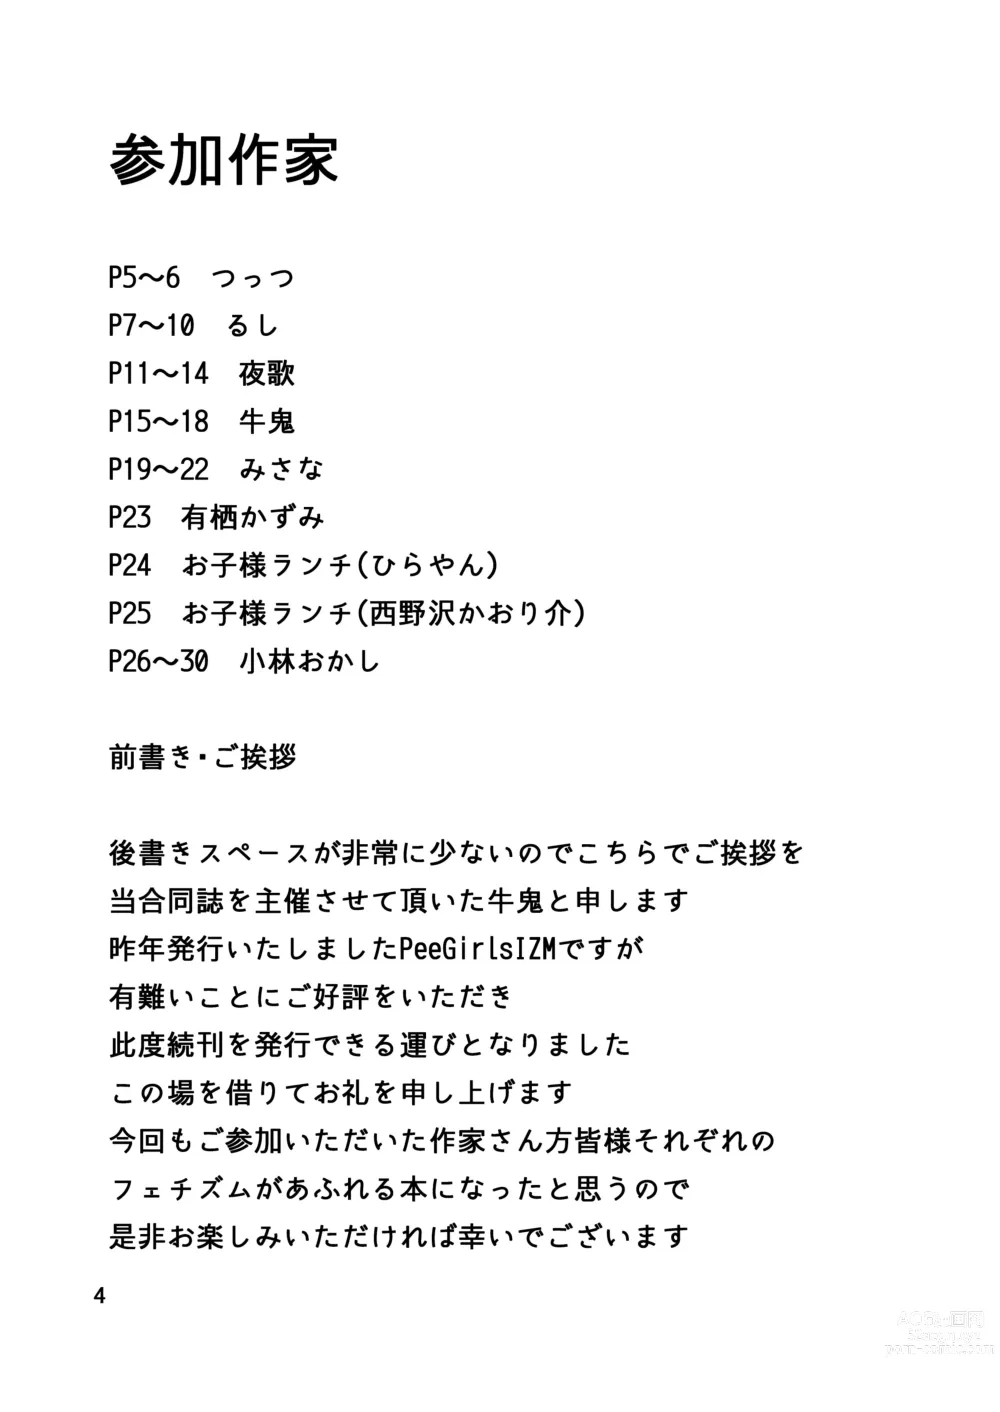 Page 3 of doujinshi PeeGirlsIZM02